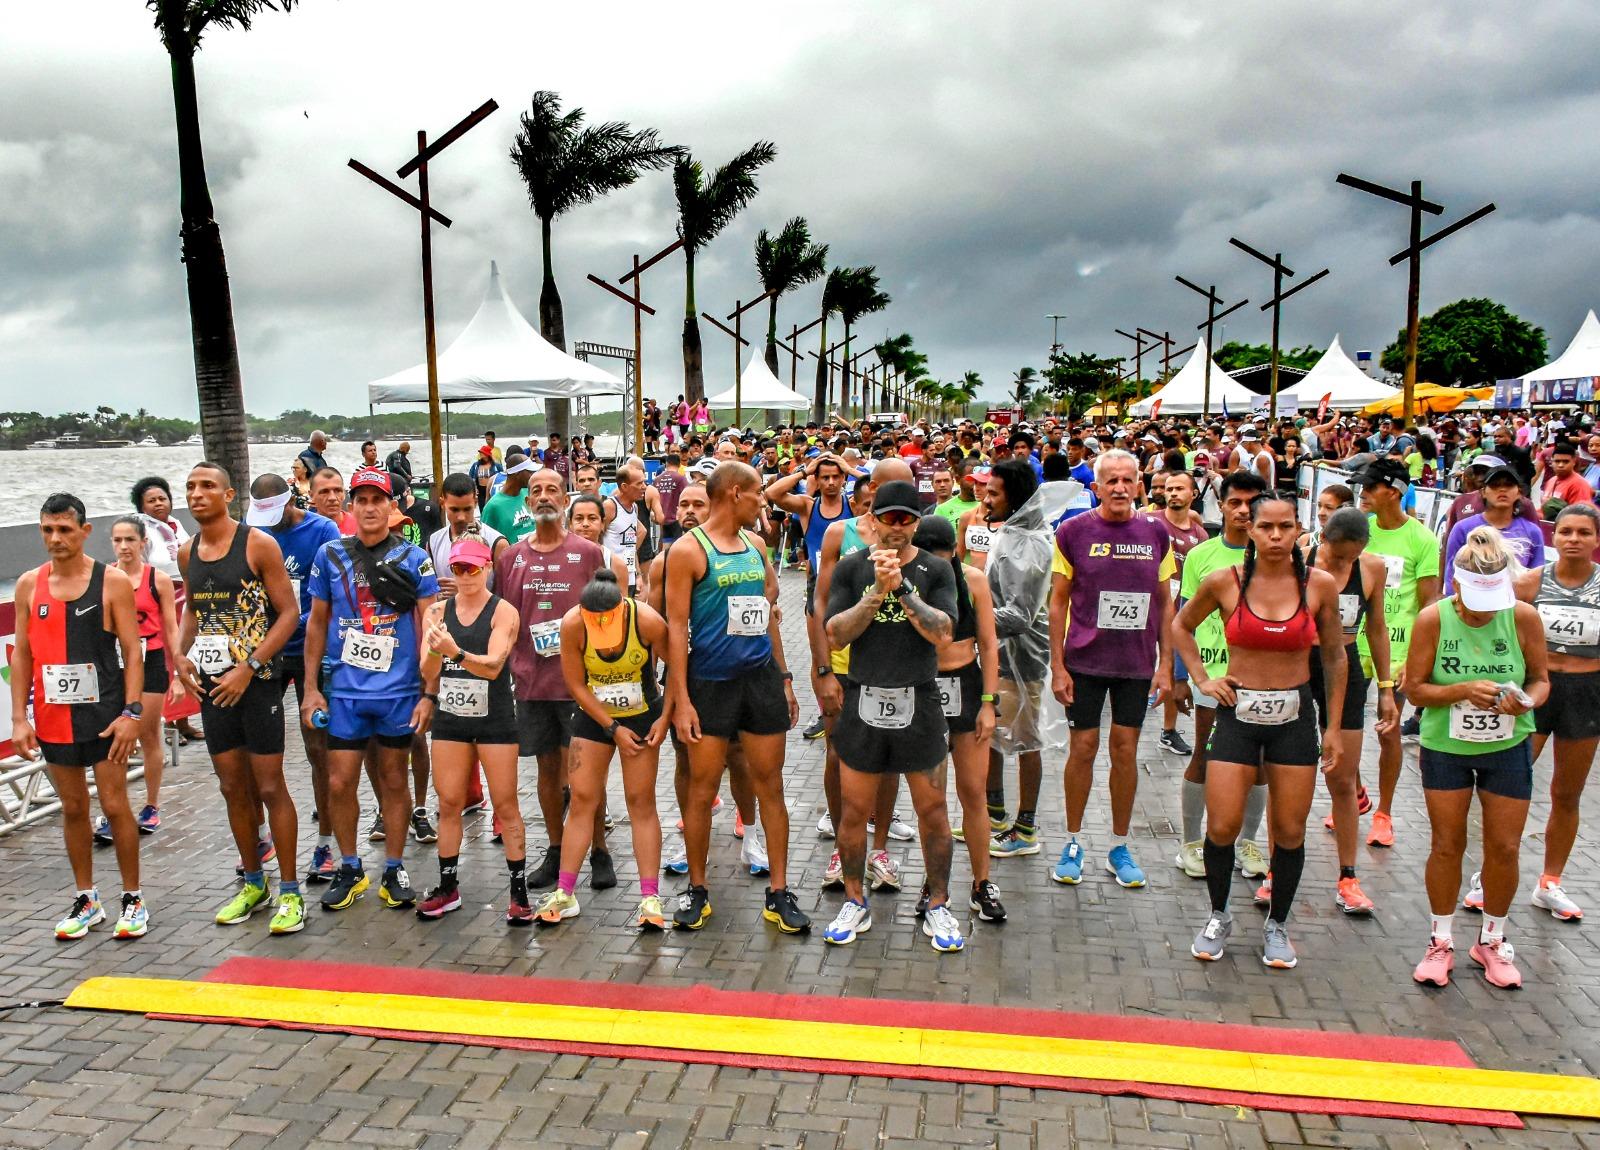 SENAC Bahia apoia pela 8ª vez consecutiva a Meia Maratona do Descobrimento